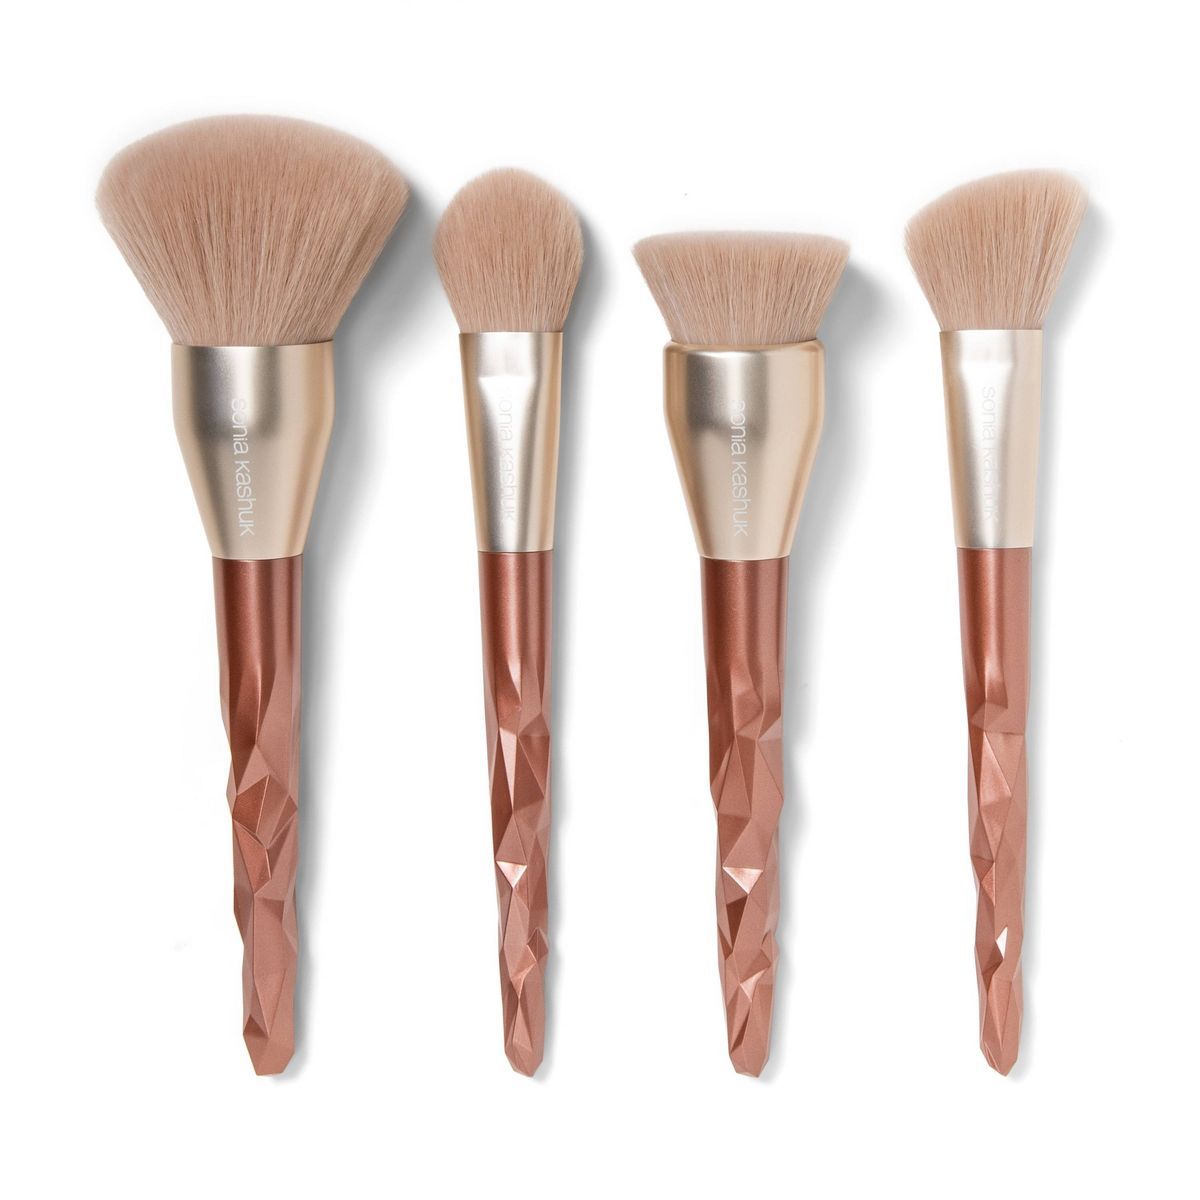 Sonia Kashuk™ Limited Edition Face Makeup Brush Set - 4pc | Target